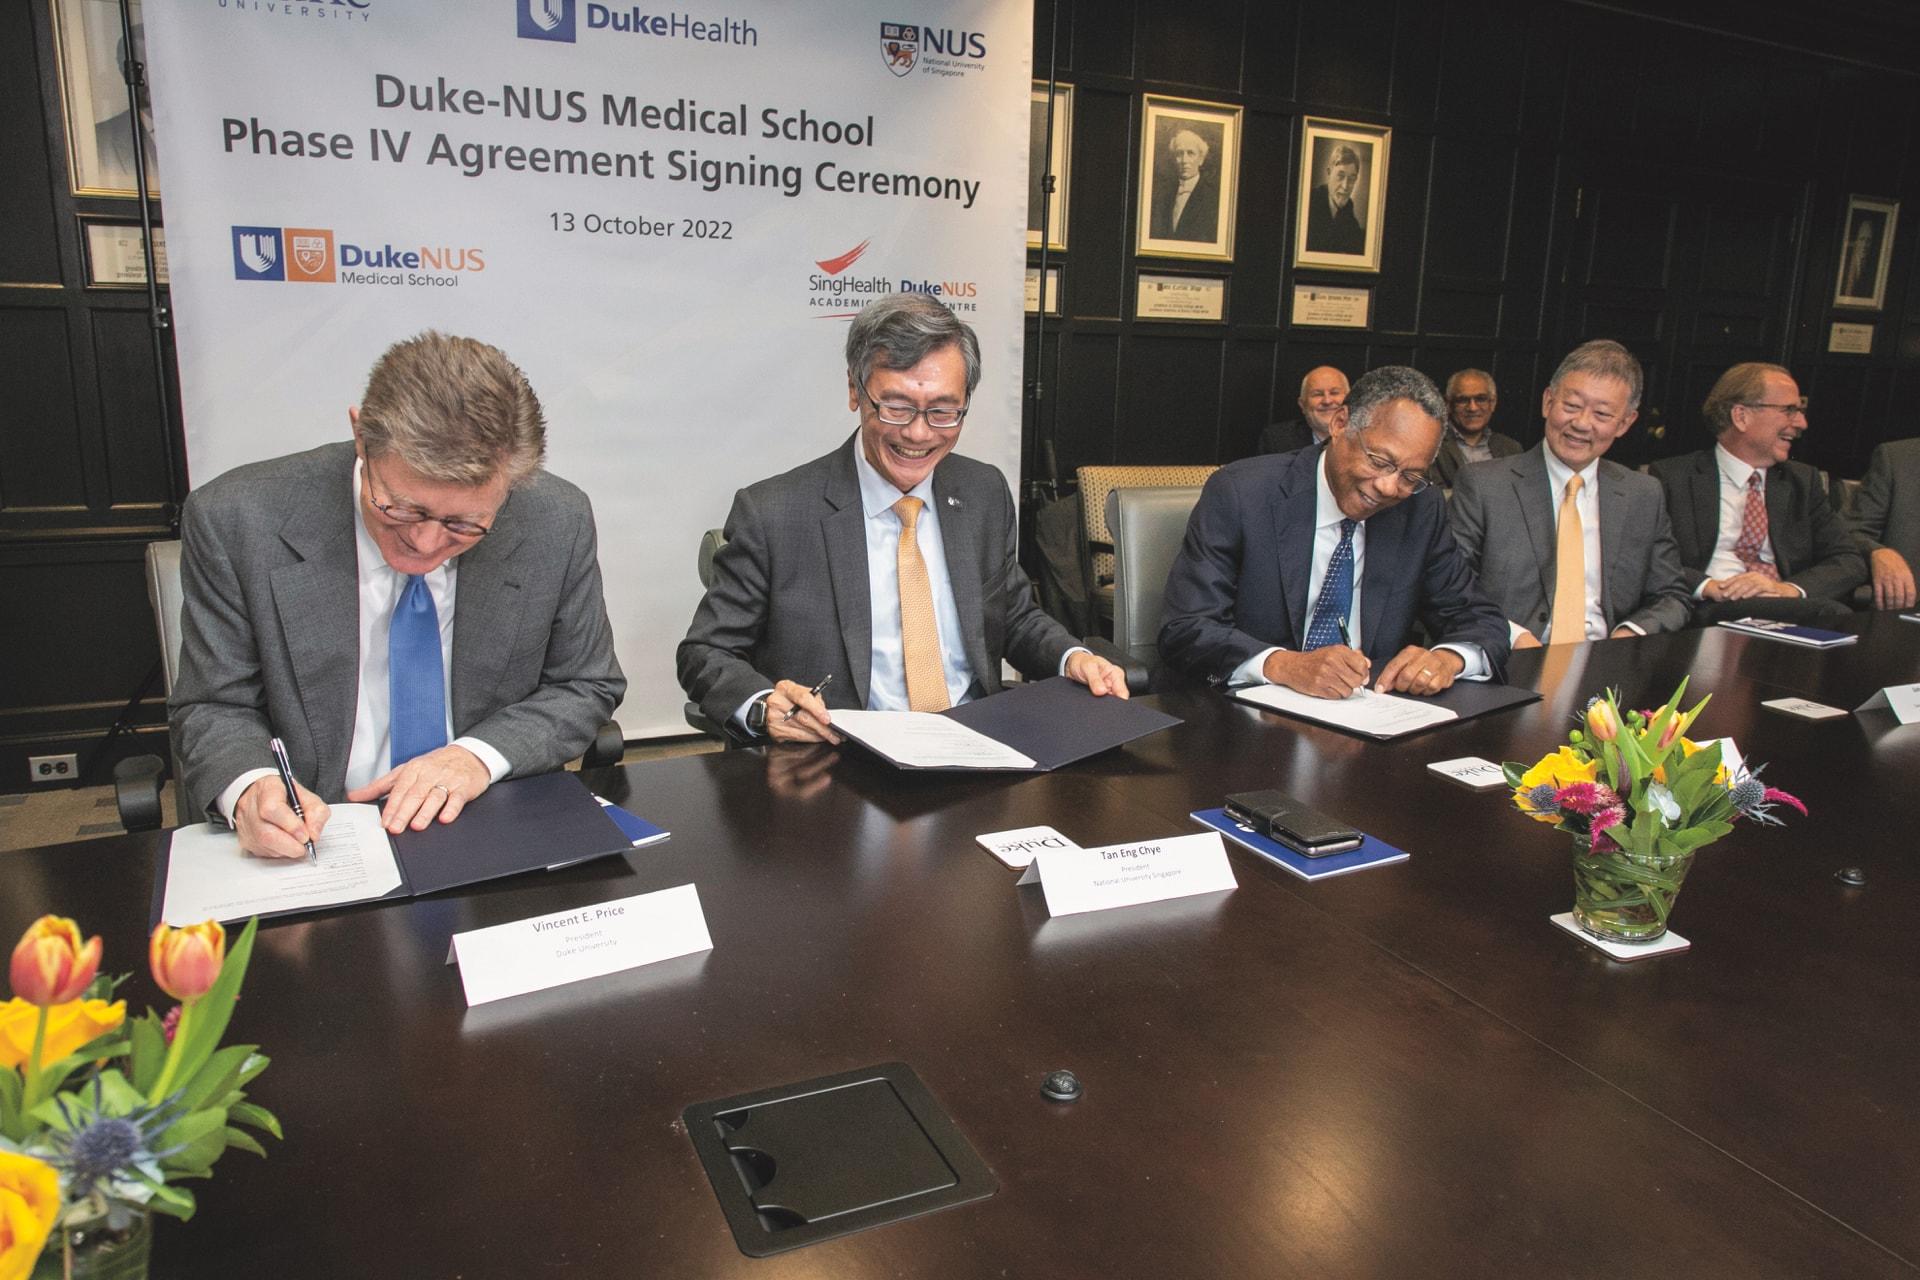 THUMBNAIL: President Price and Singapore's Duke-NUS Medical School renewing their partnership agreement.